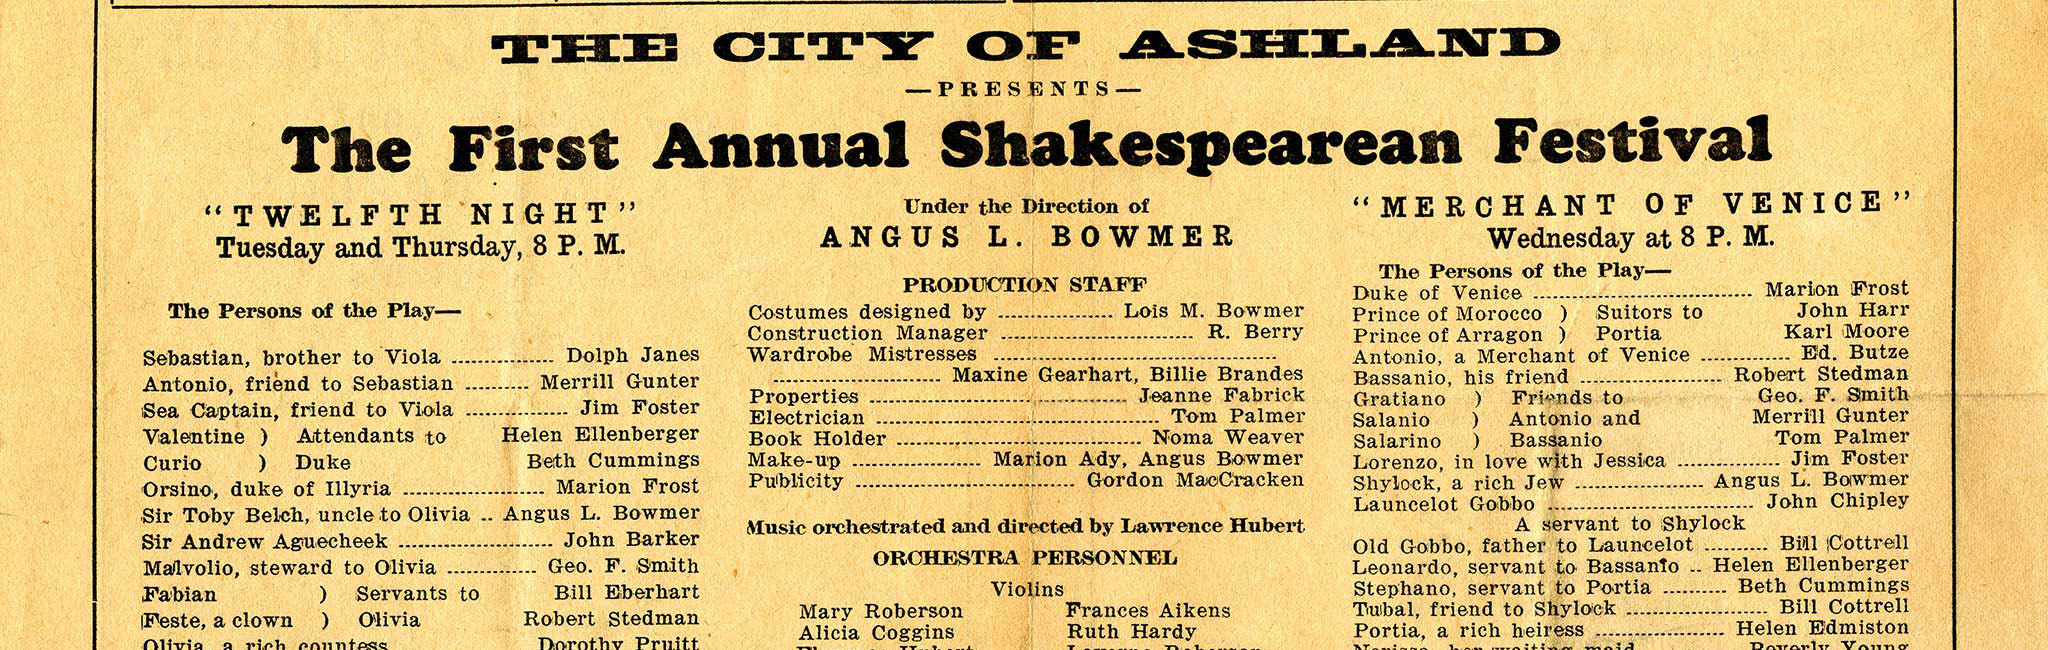 Timeline of Oregon Shakespeare Festival's Rich History